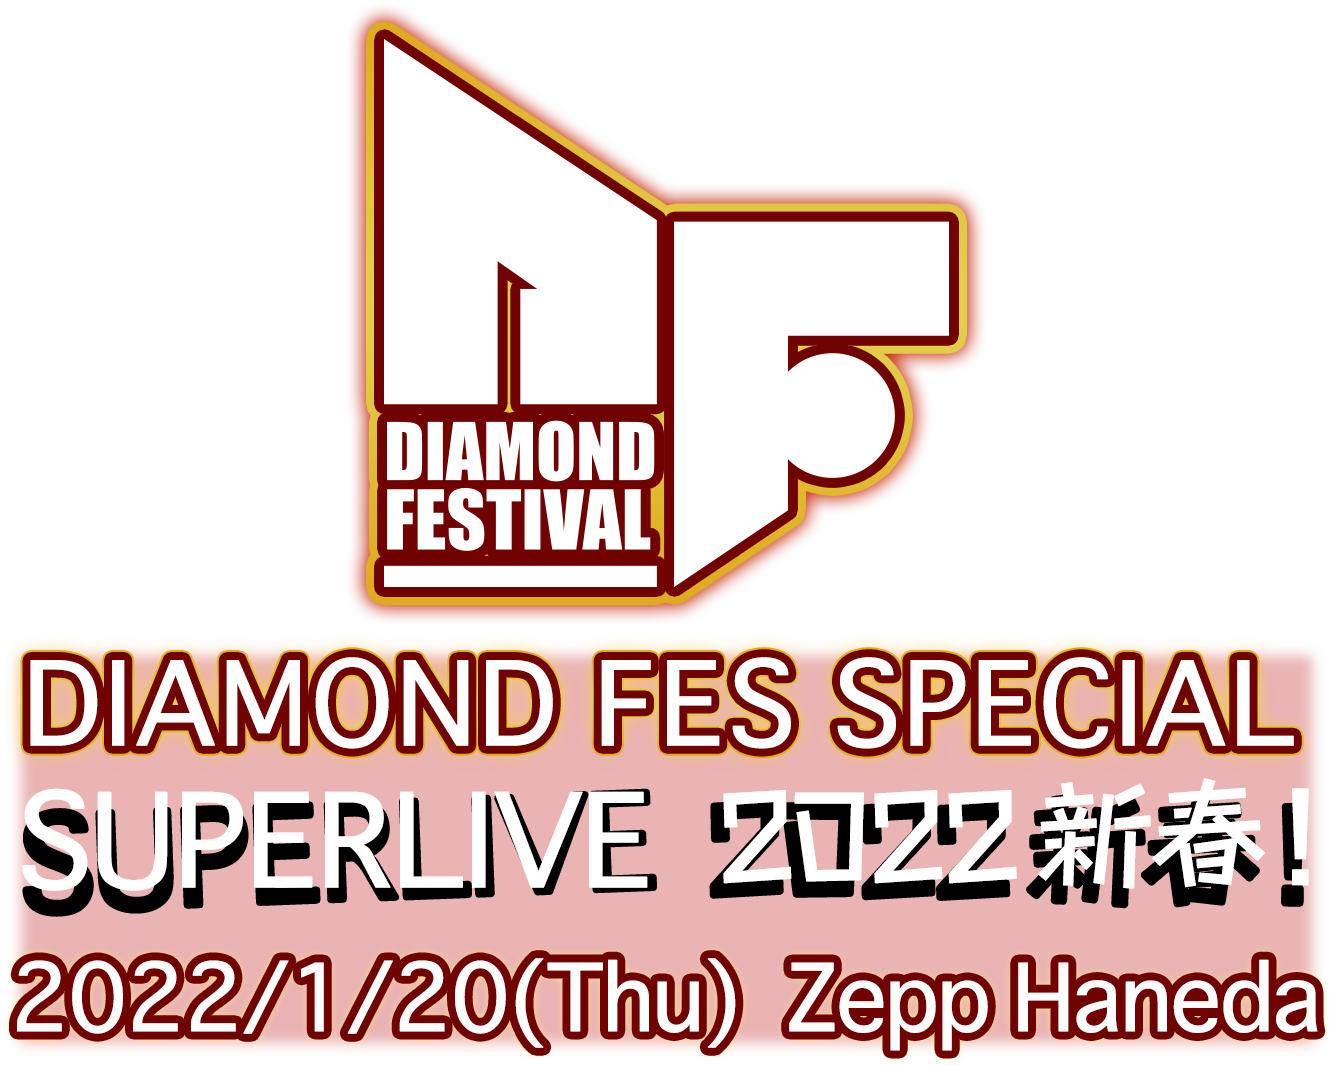 DIAMOND FES OSAKA  Xmas Live organized by皇治